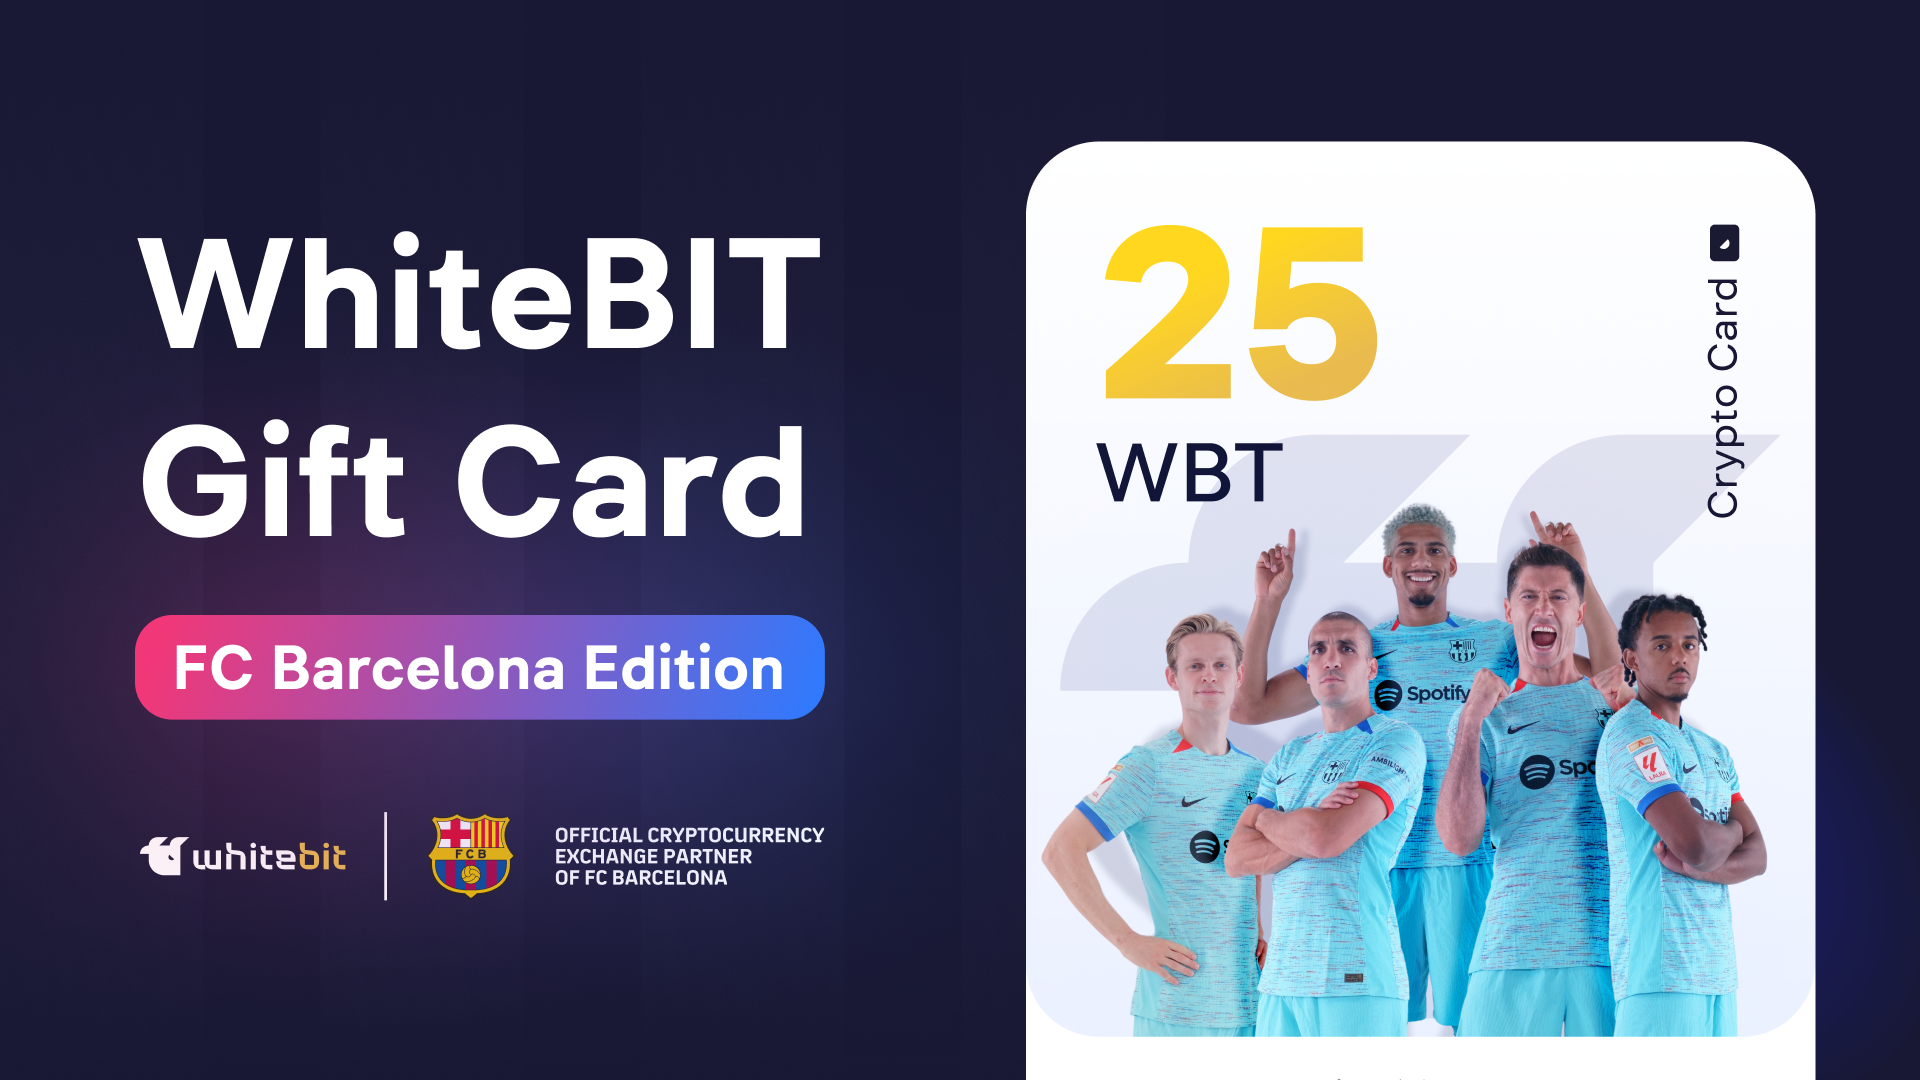 WhiteBIT - FC Barcelona Edition - 25 WBT Gift Card